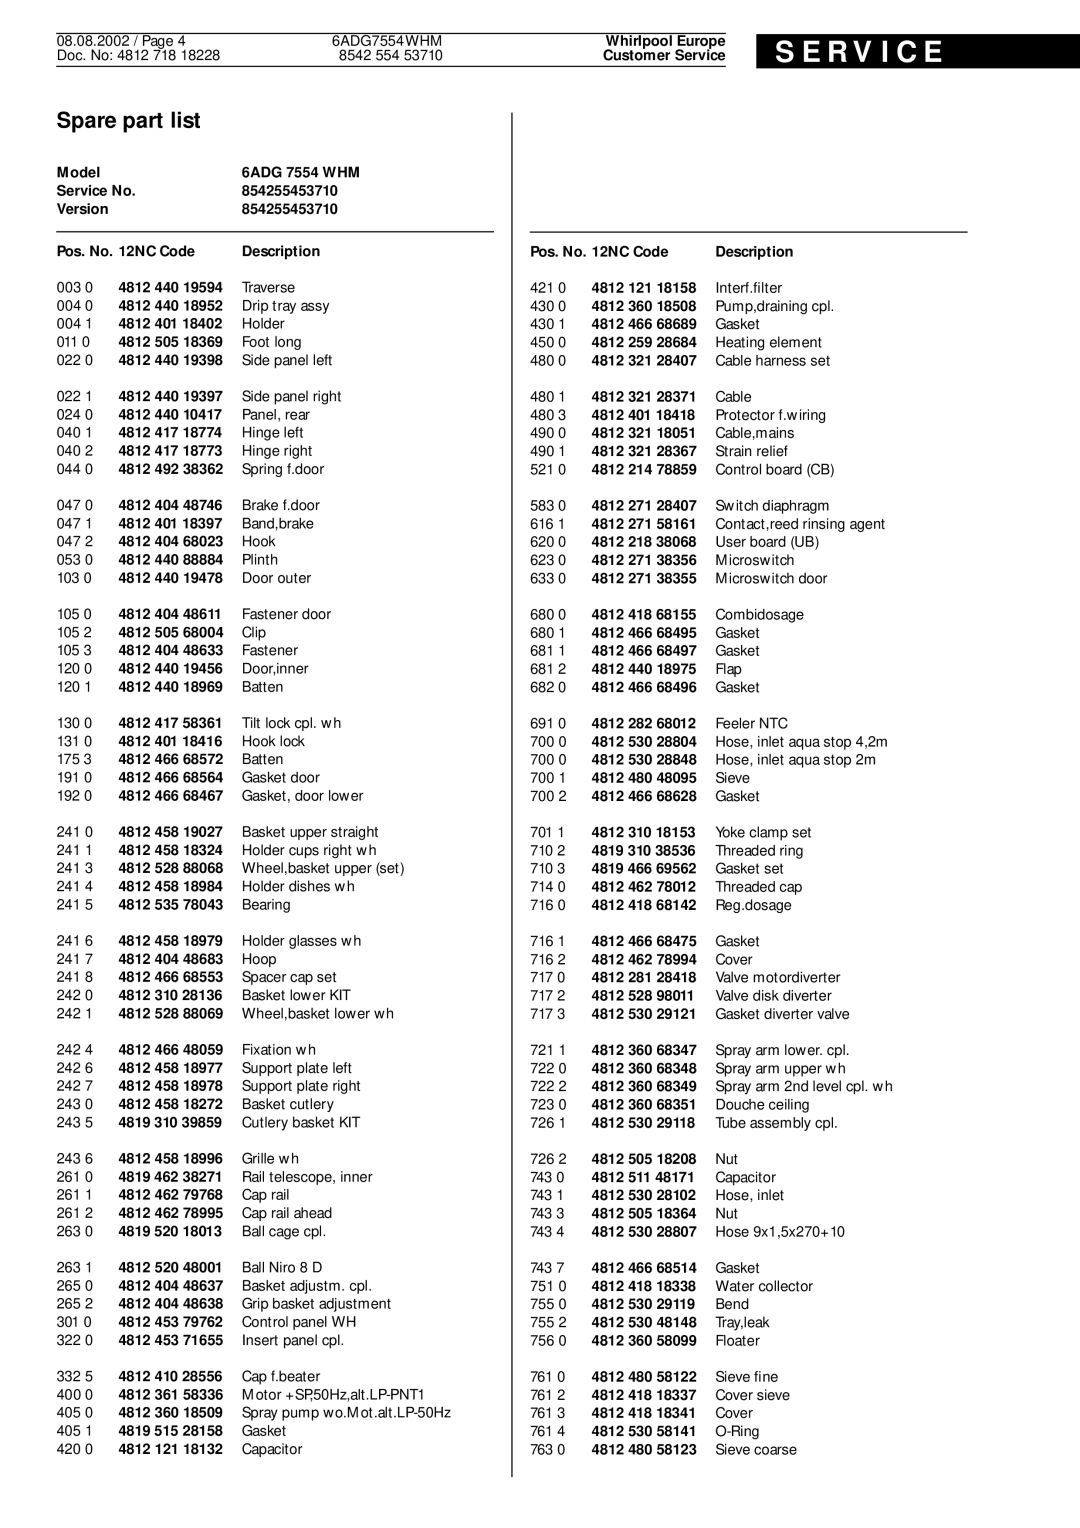 Whirlpool 6ADG 7554 WHM service manual Spare part list, S E R V I C E 